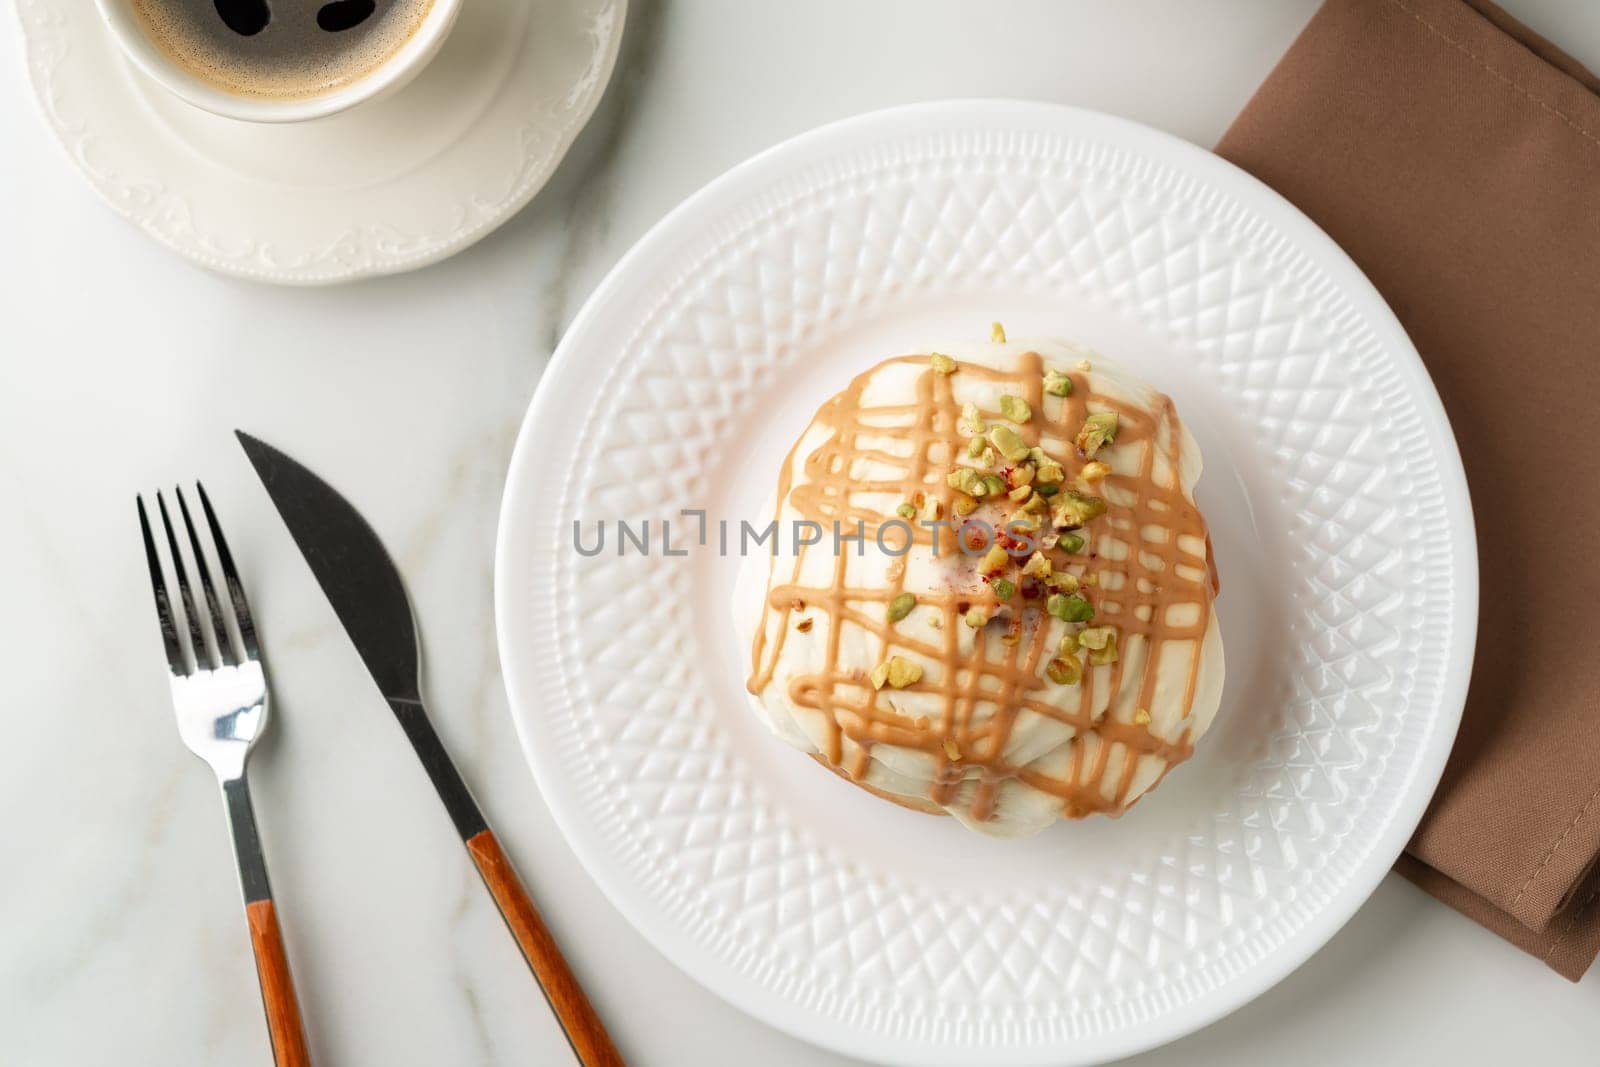 Cinnamon roll bun with icing on plate by Fabrikasimf